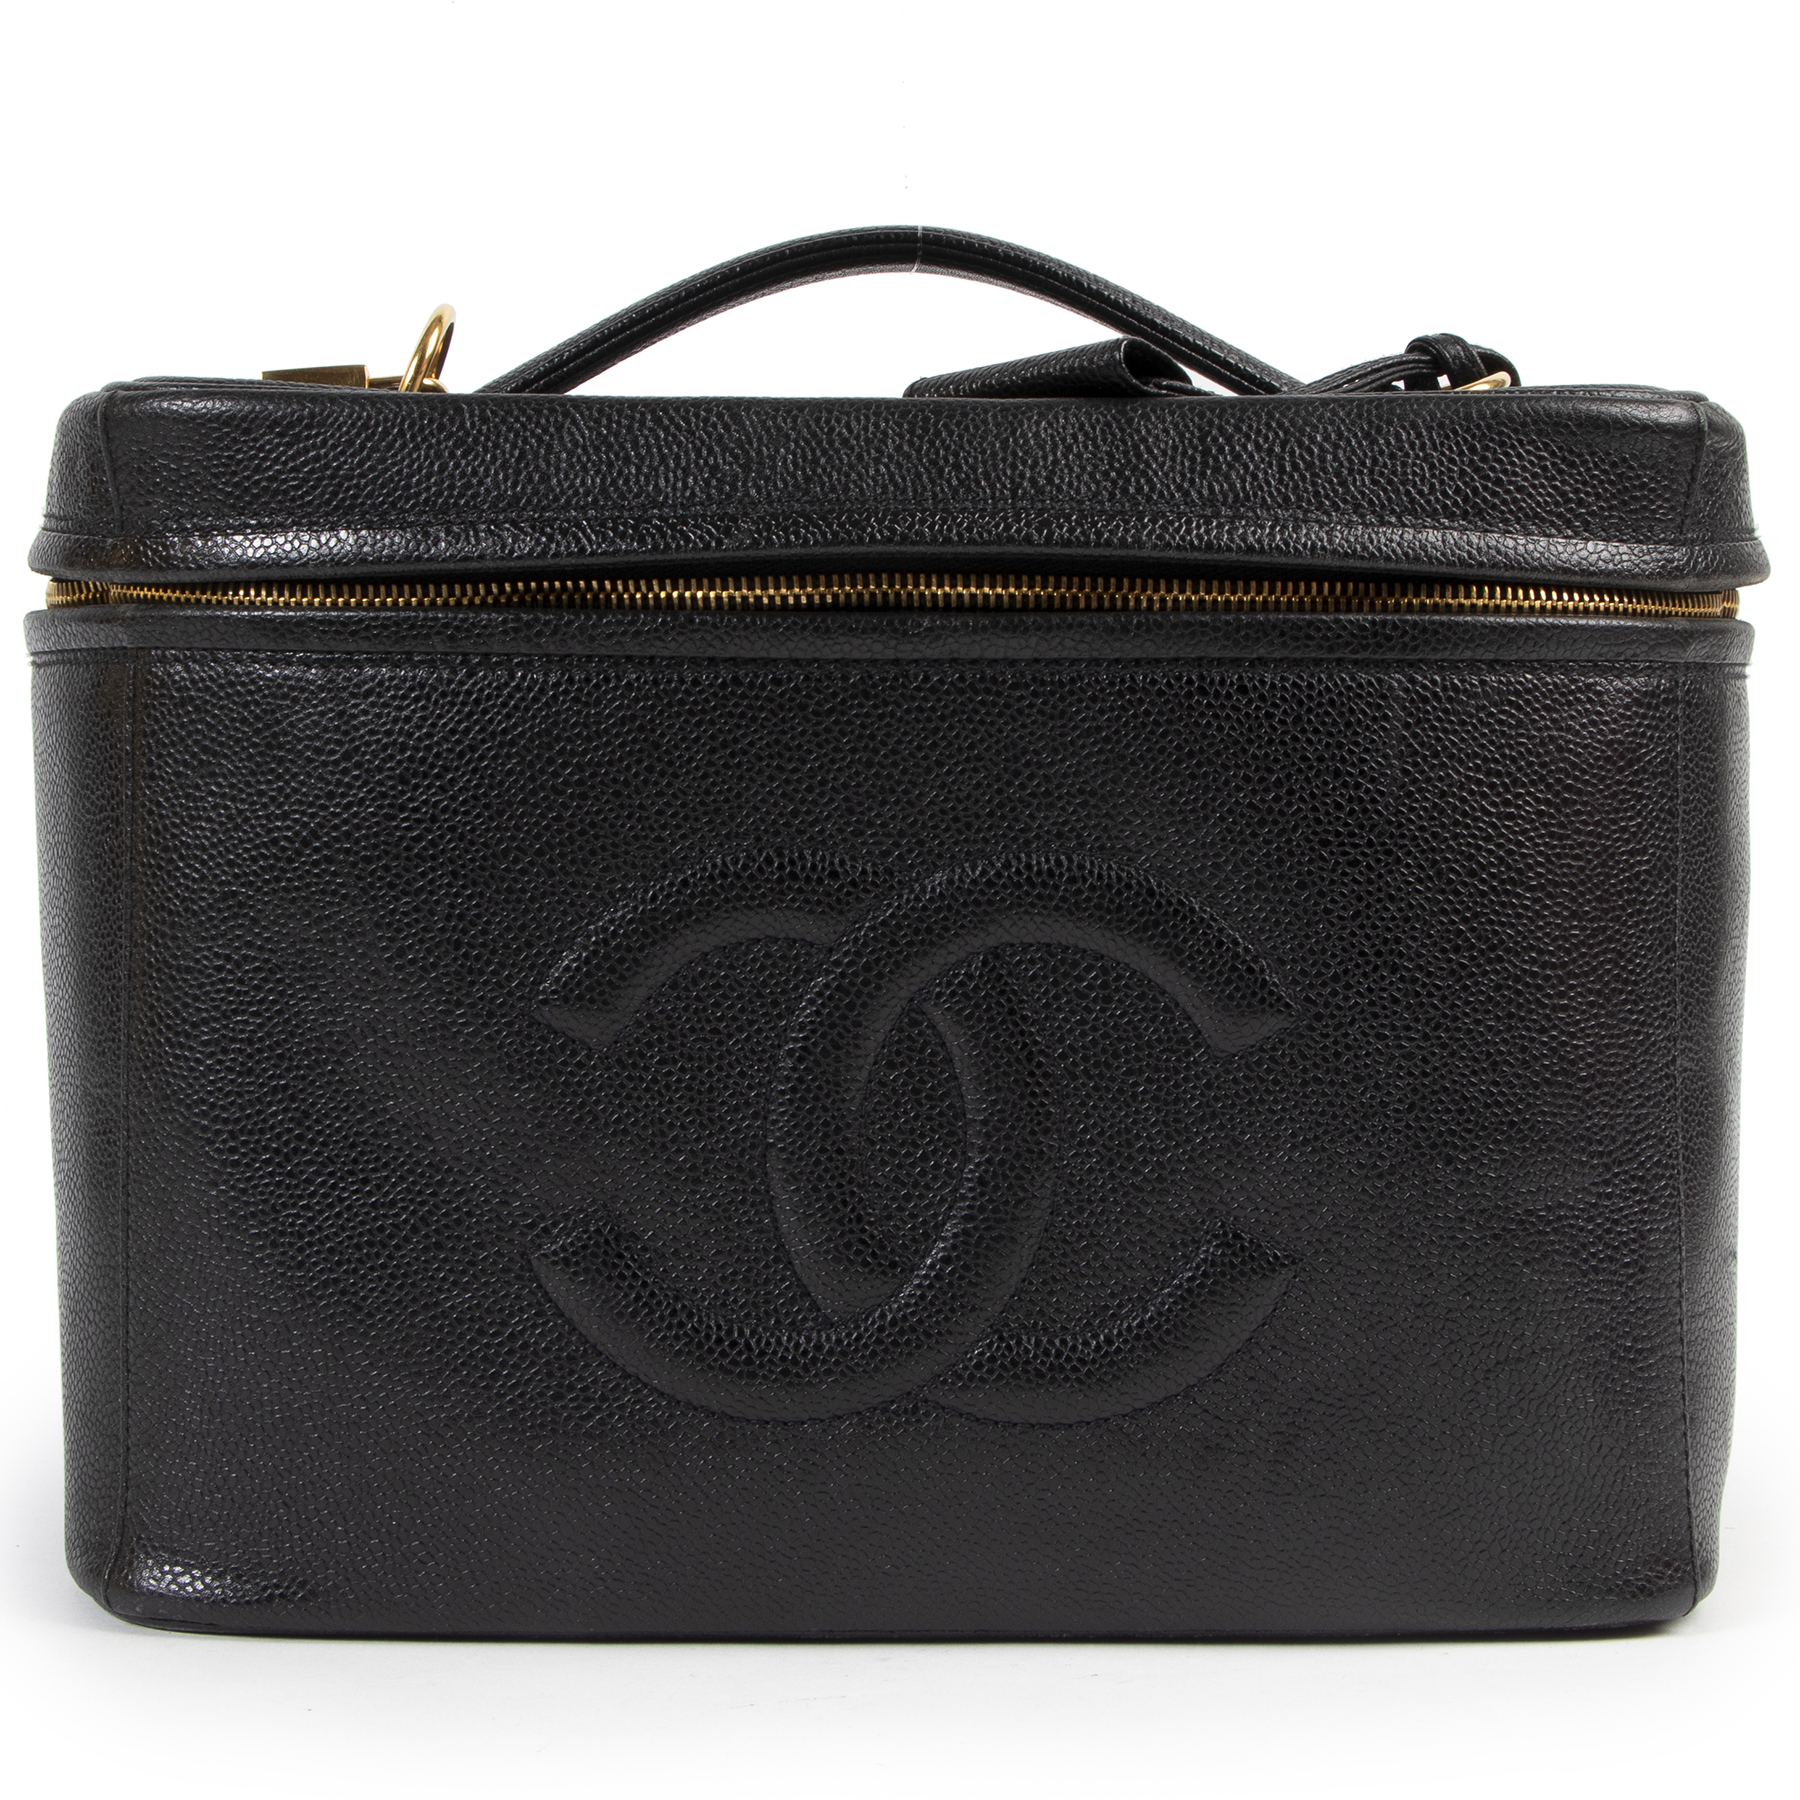 Rare Vintage Chanel Wood & Leather Handbag, 1stdibs.com